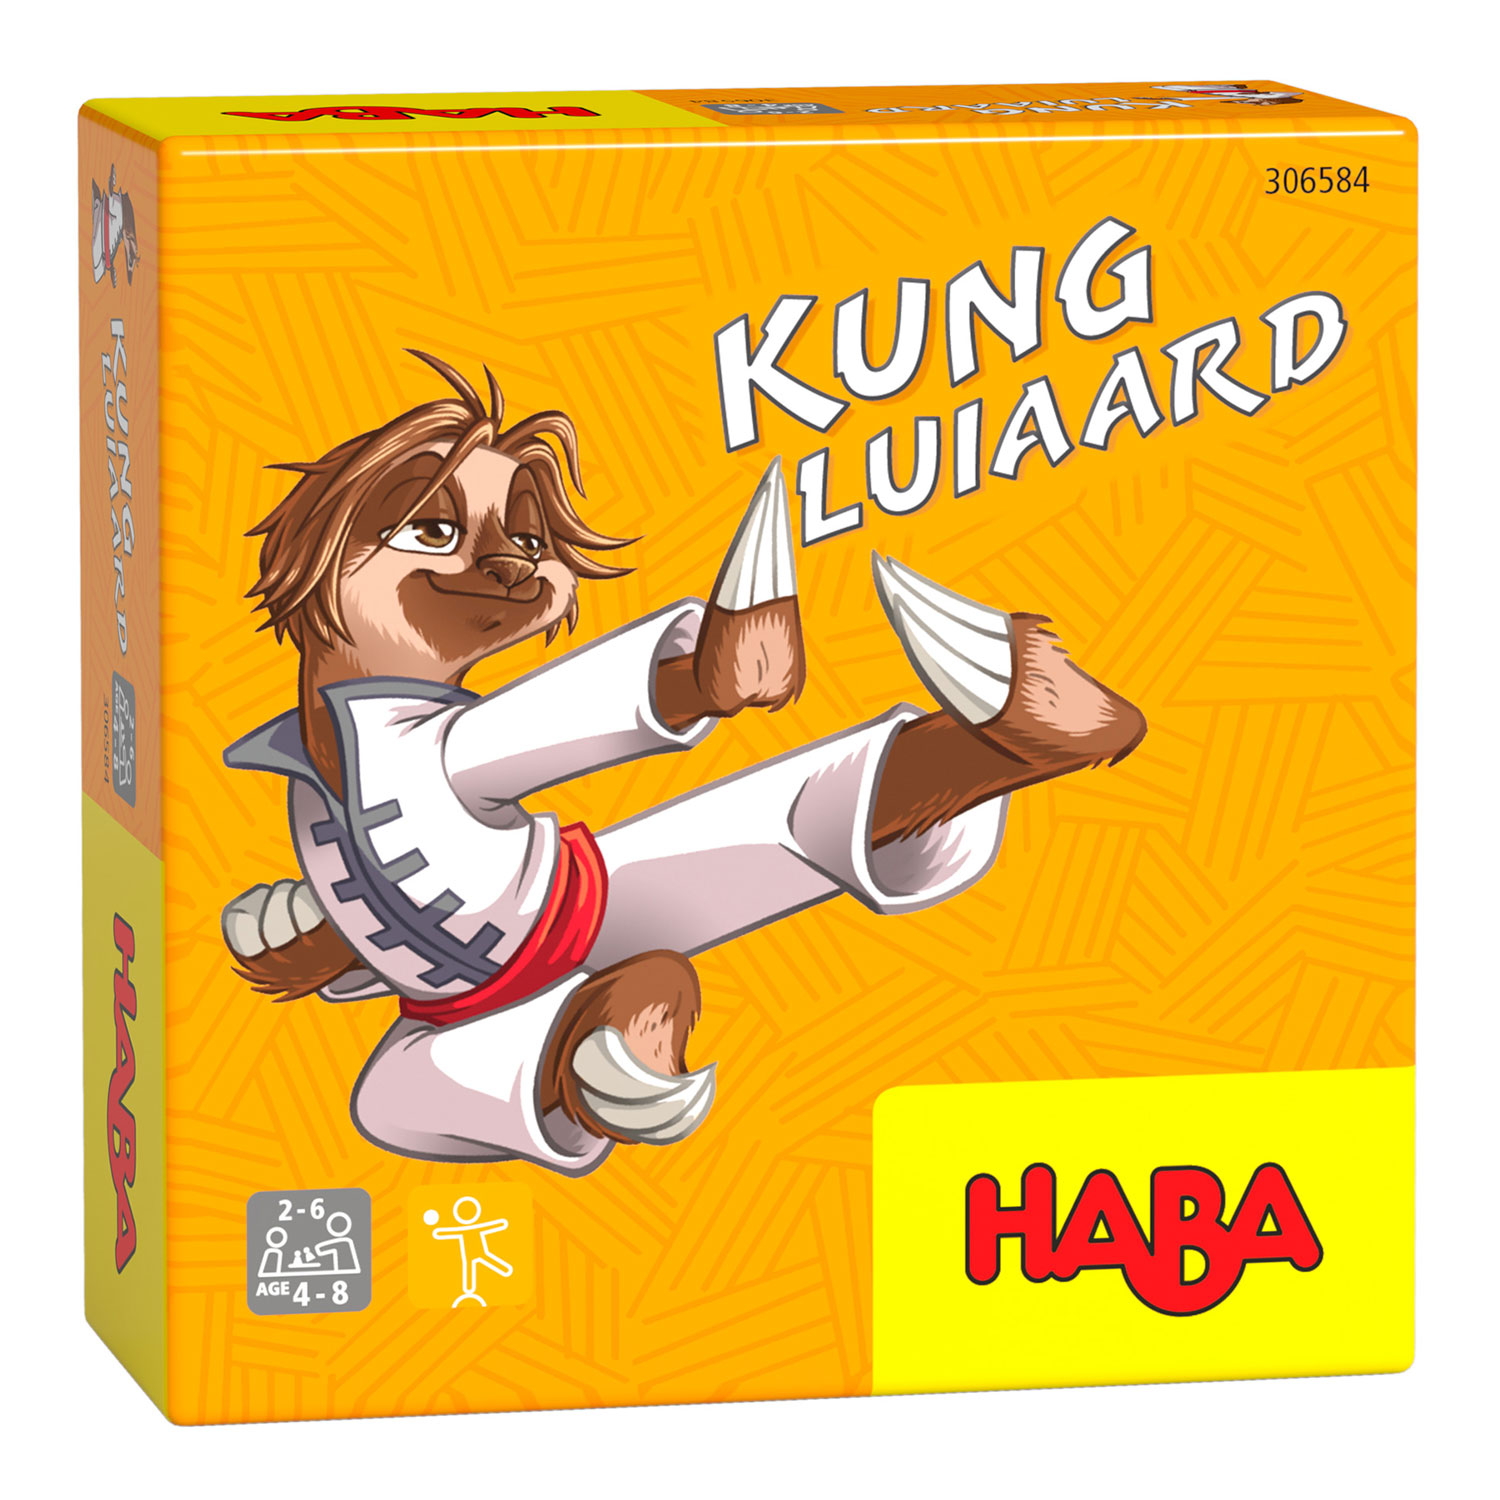 Haba Supermini Spel - Kung Luiaard